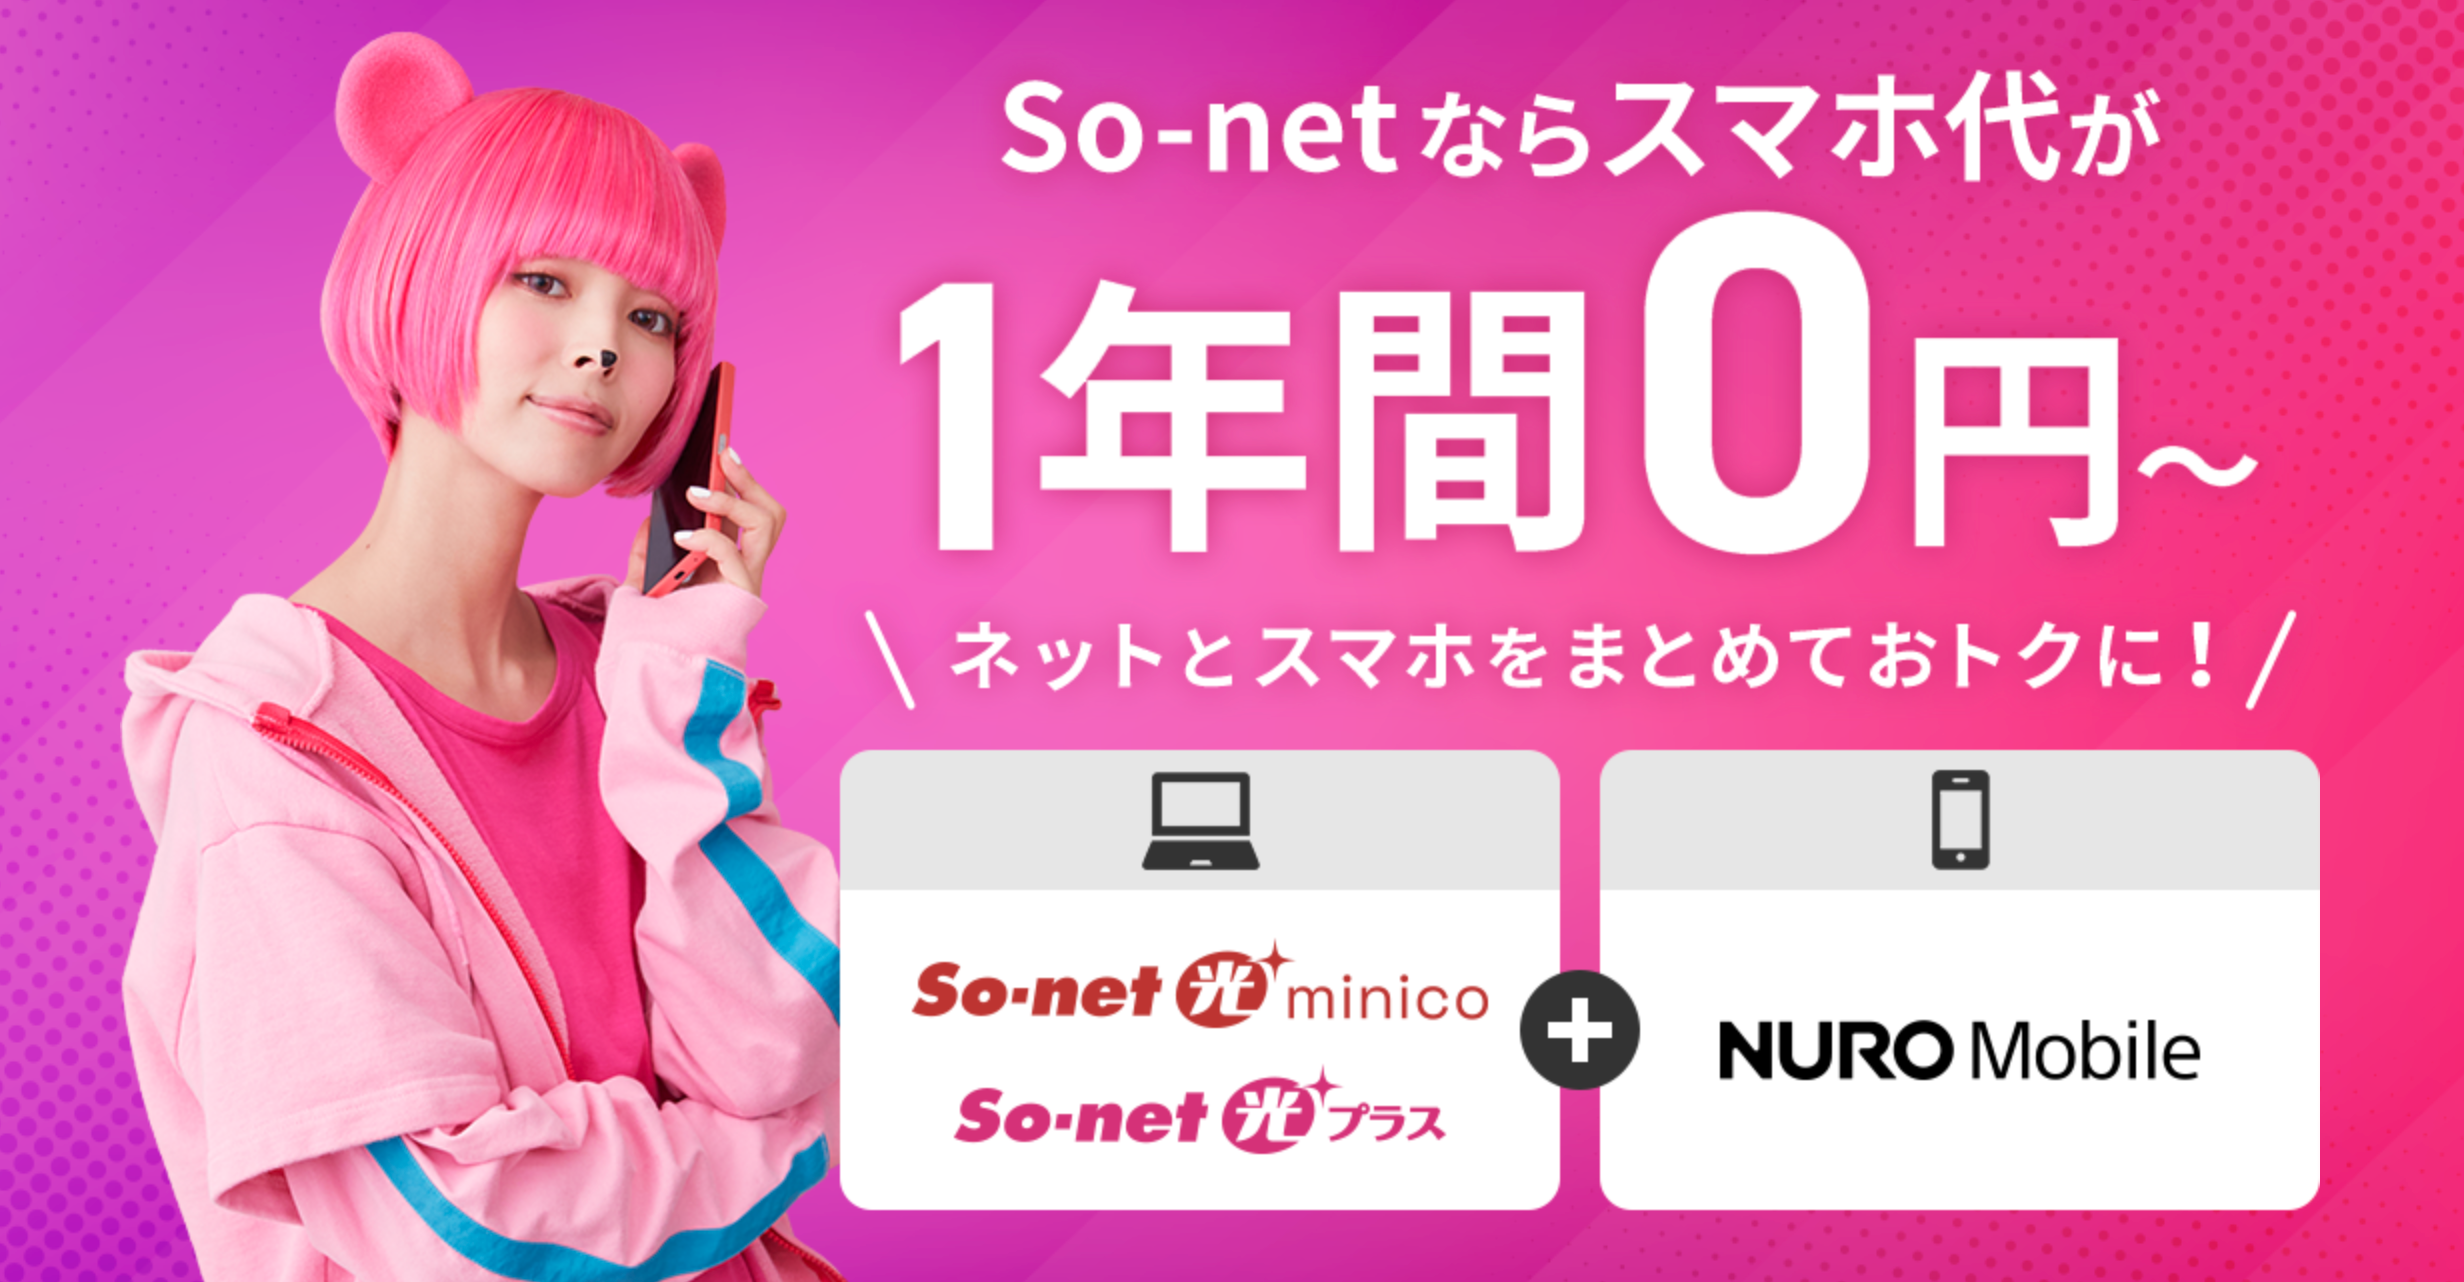 So-net 光 & NUROモバイル セット割